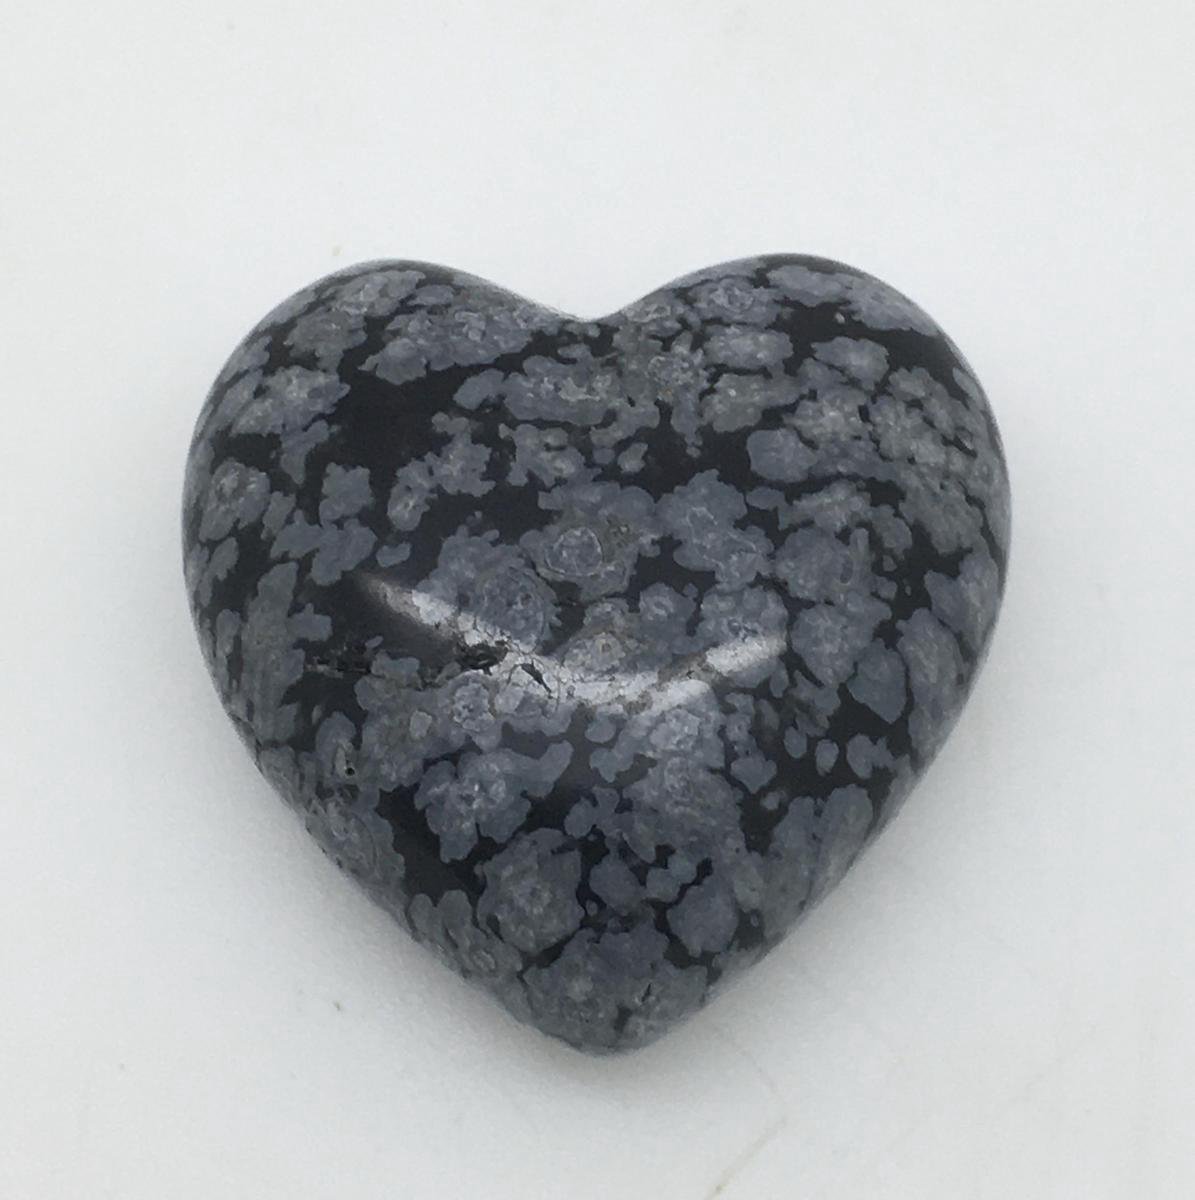 Sneeuwvlok obsidiaan edelsteen hart 3 x 3 cm zwart wit reinigende beschermer en geeft inzicht